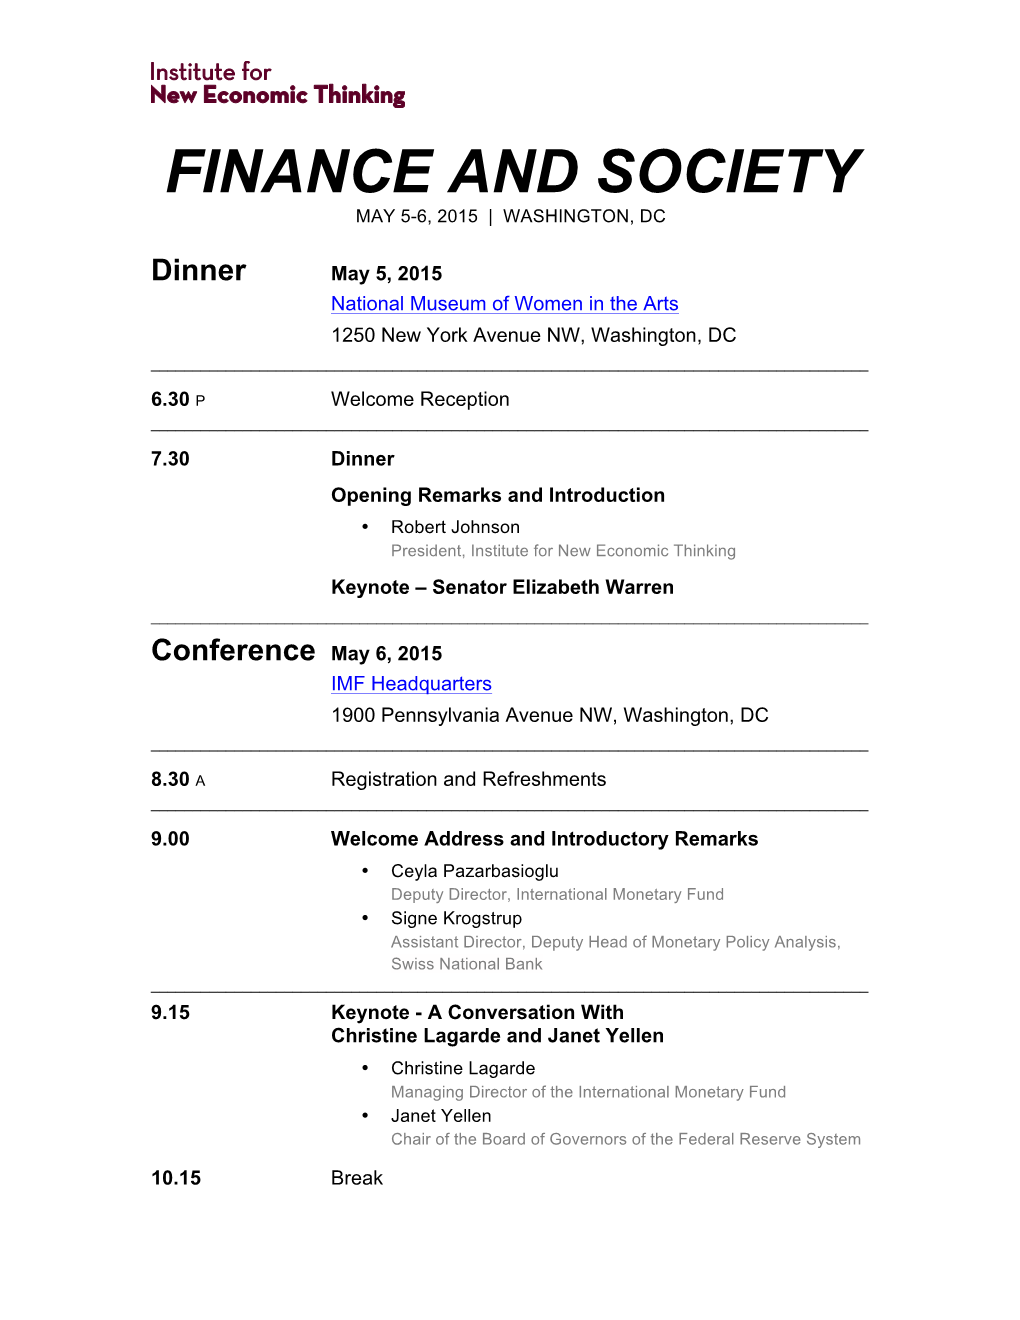 Finance and Society May 5-6, 2015 | Washington, Dc